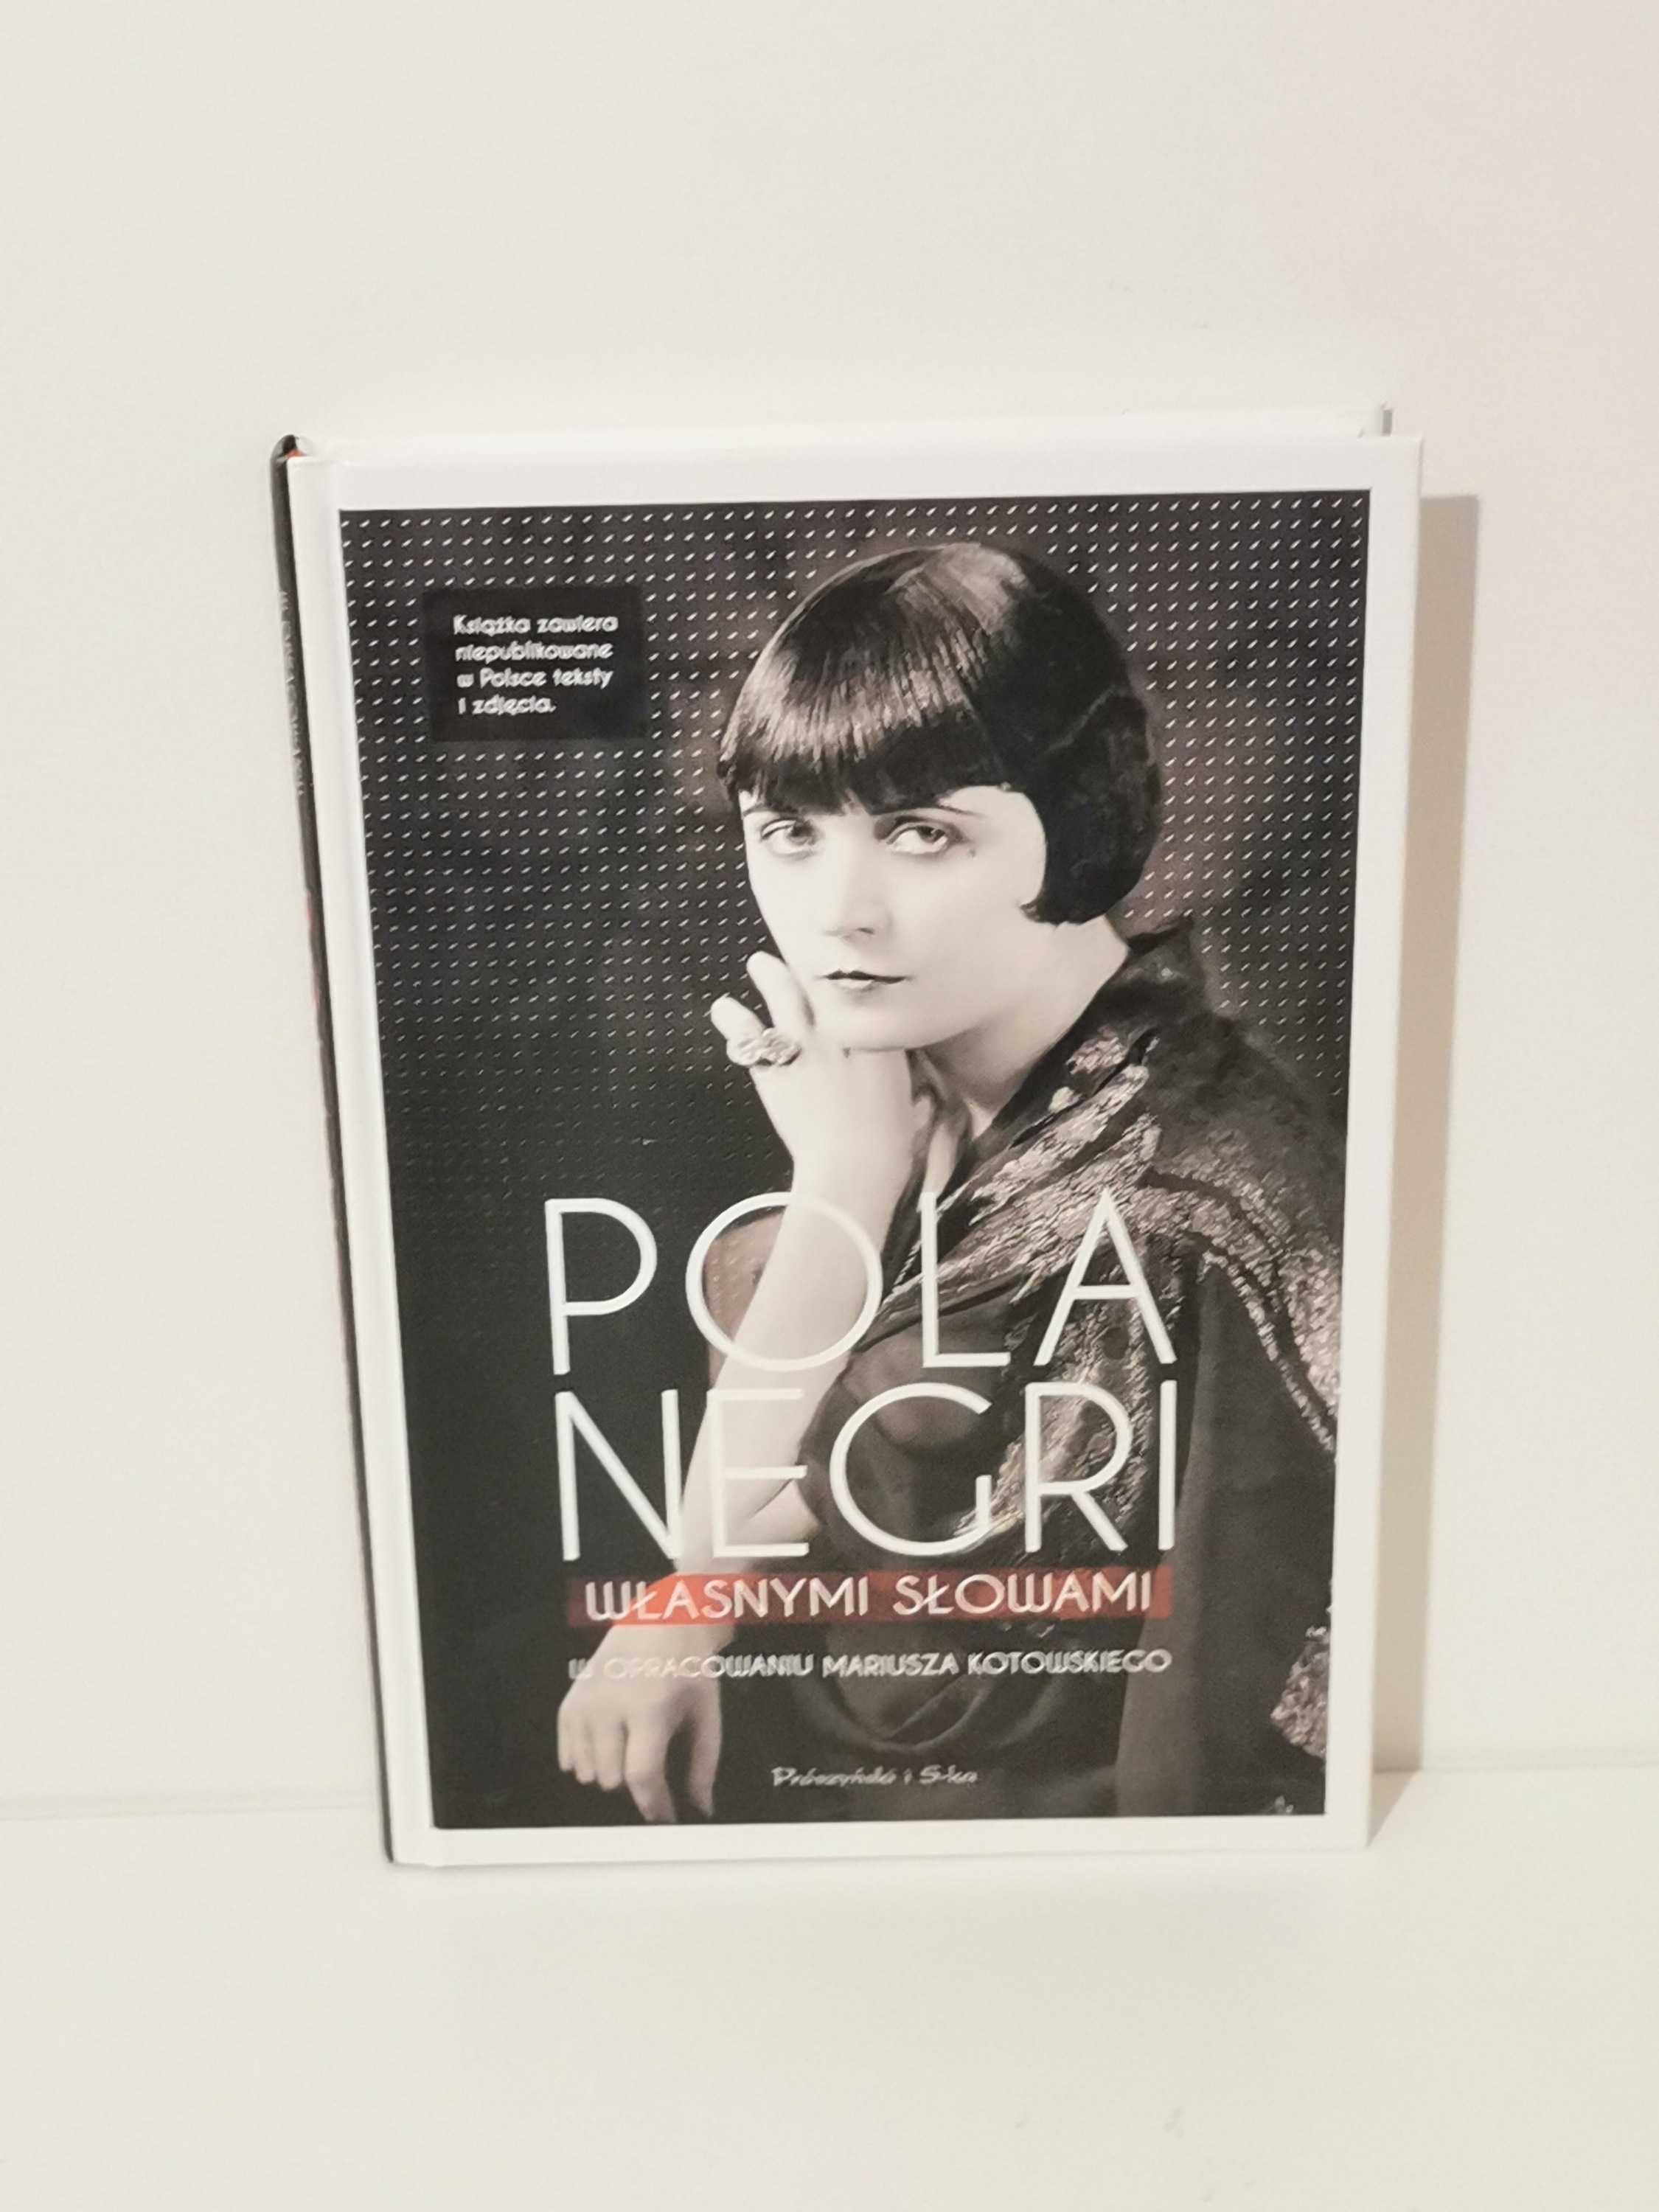 Książka - "Pola Negri. Własnymi słowami" - Mateusz Kotowski